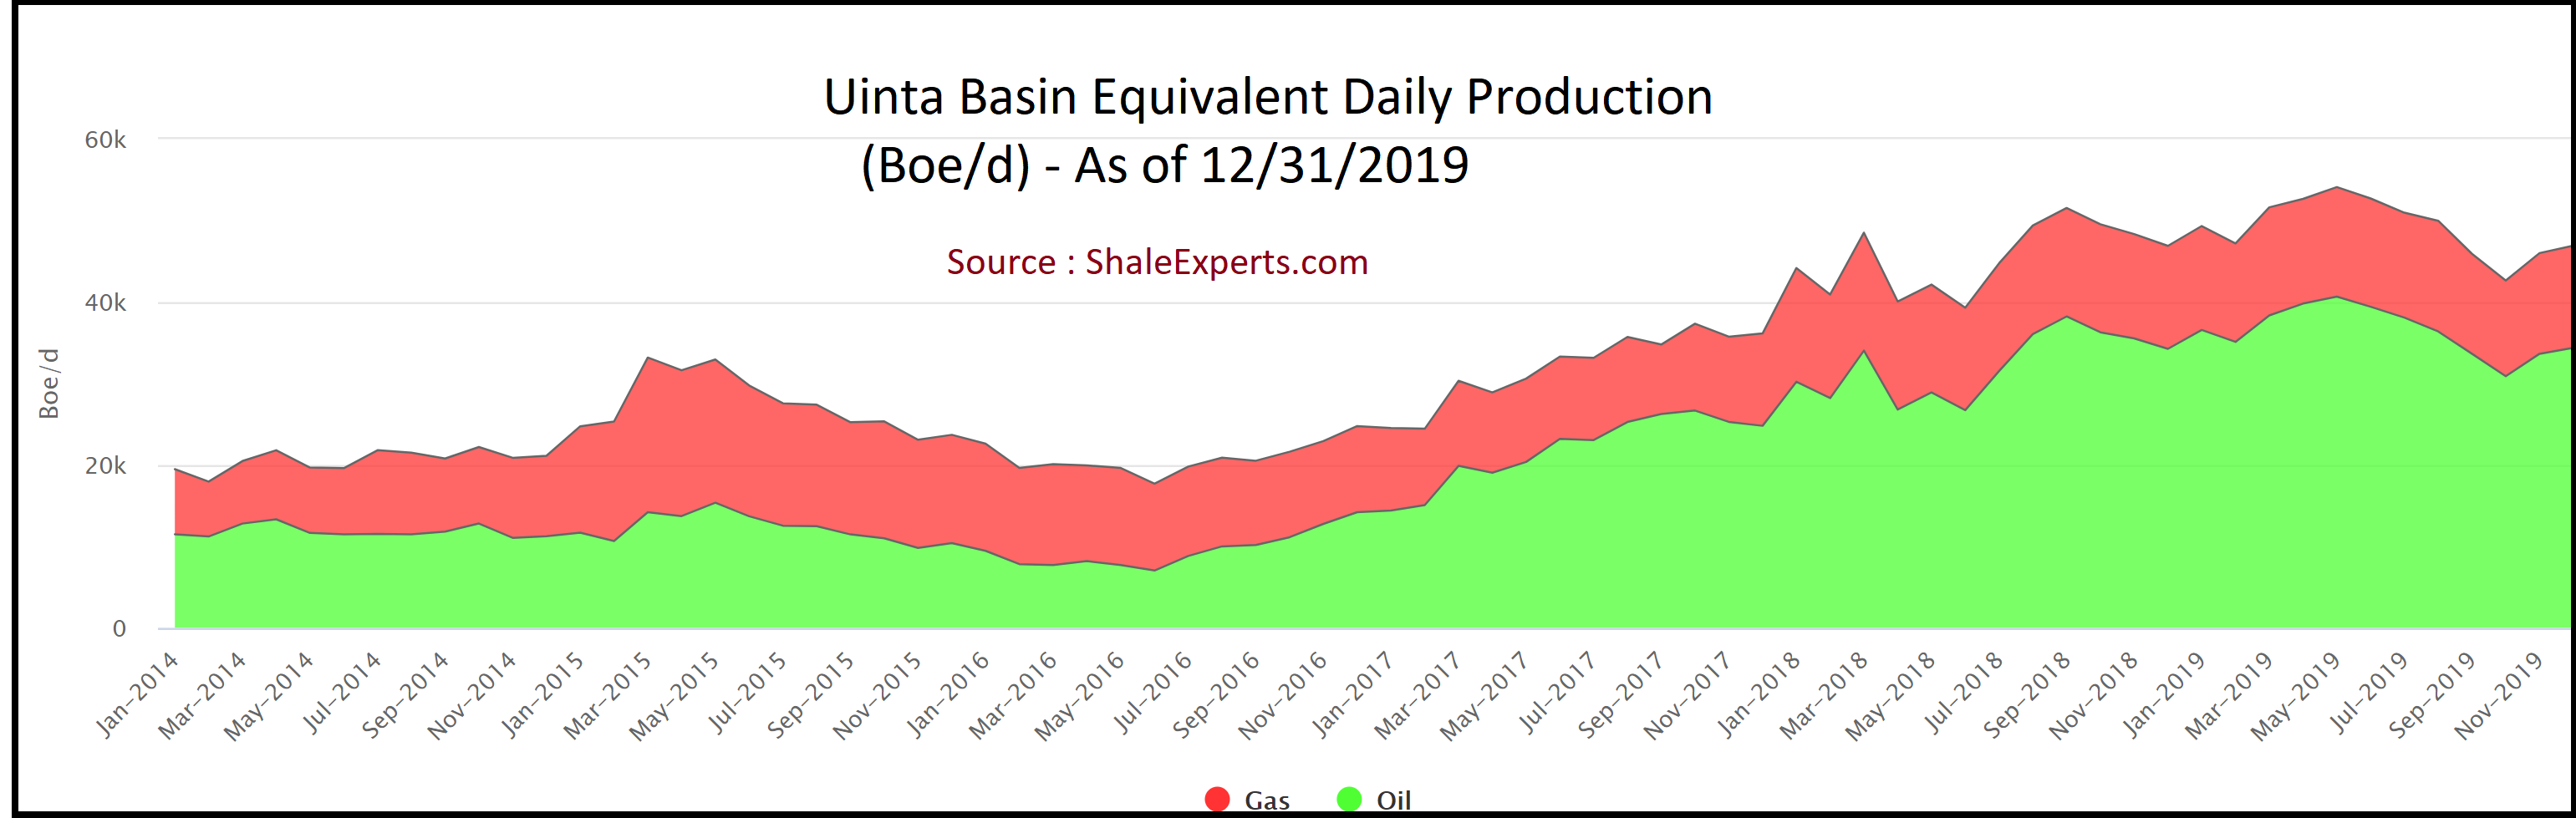 Uinta Basin Production Equivalent